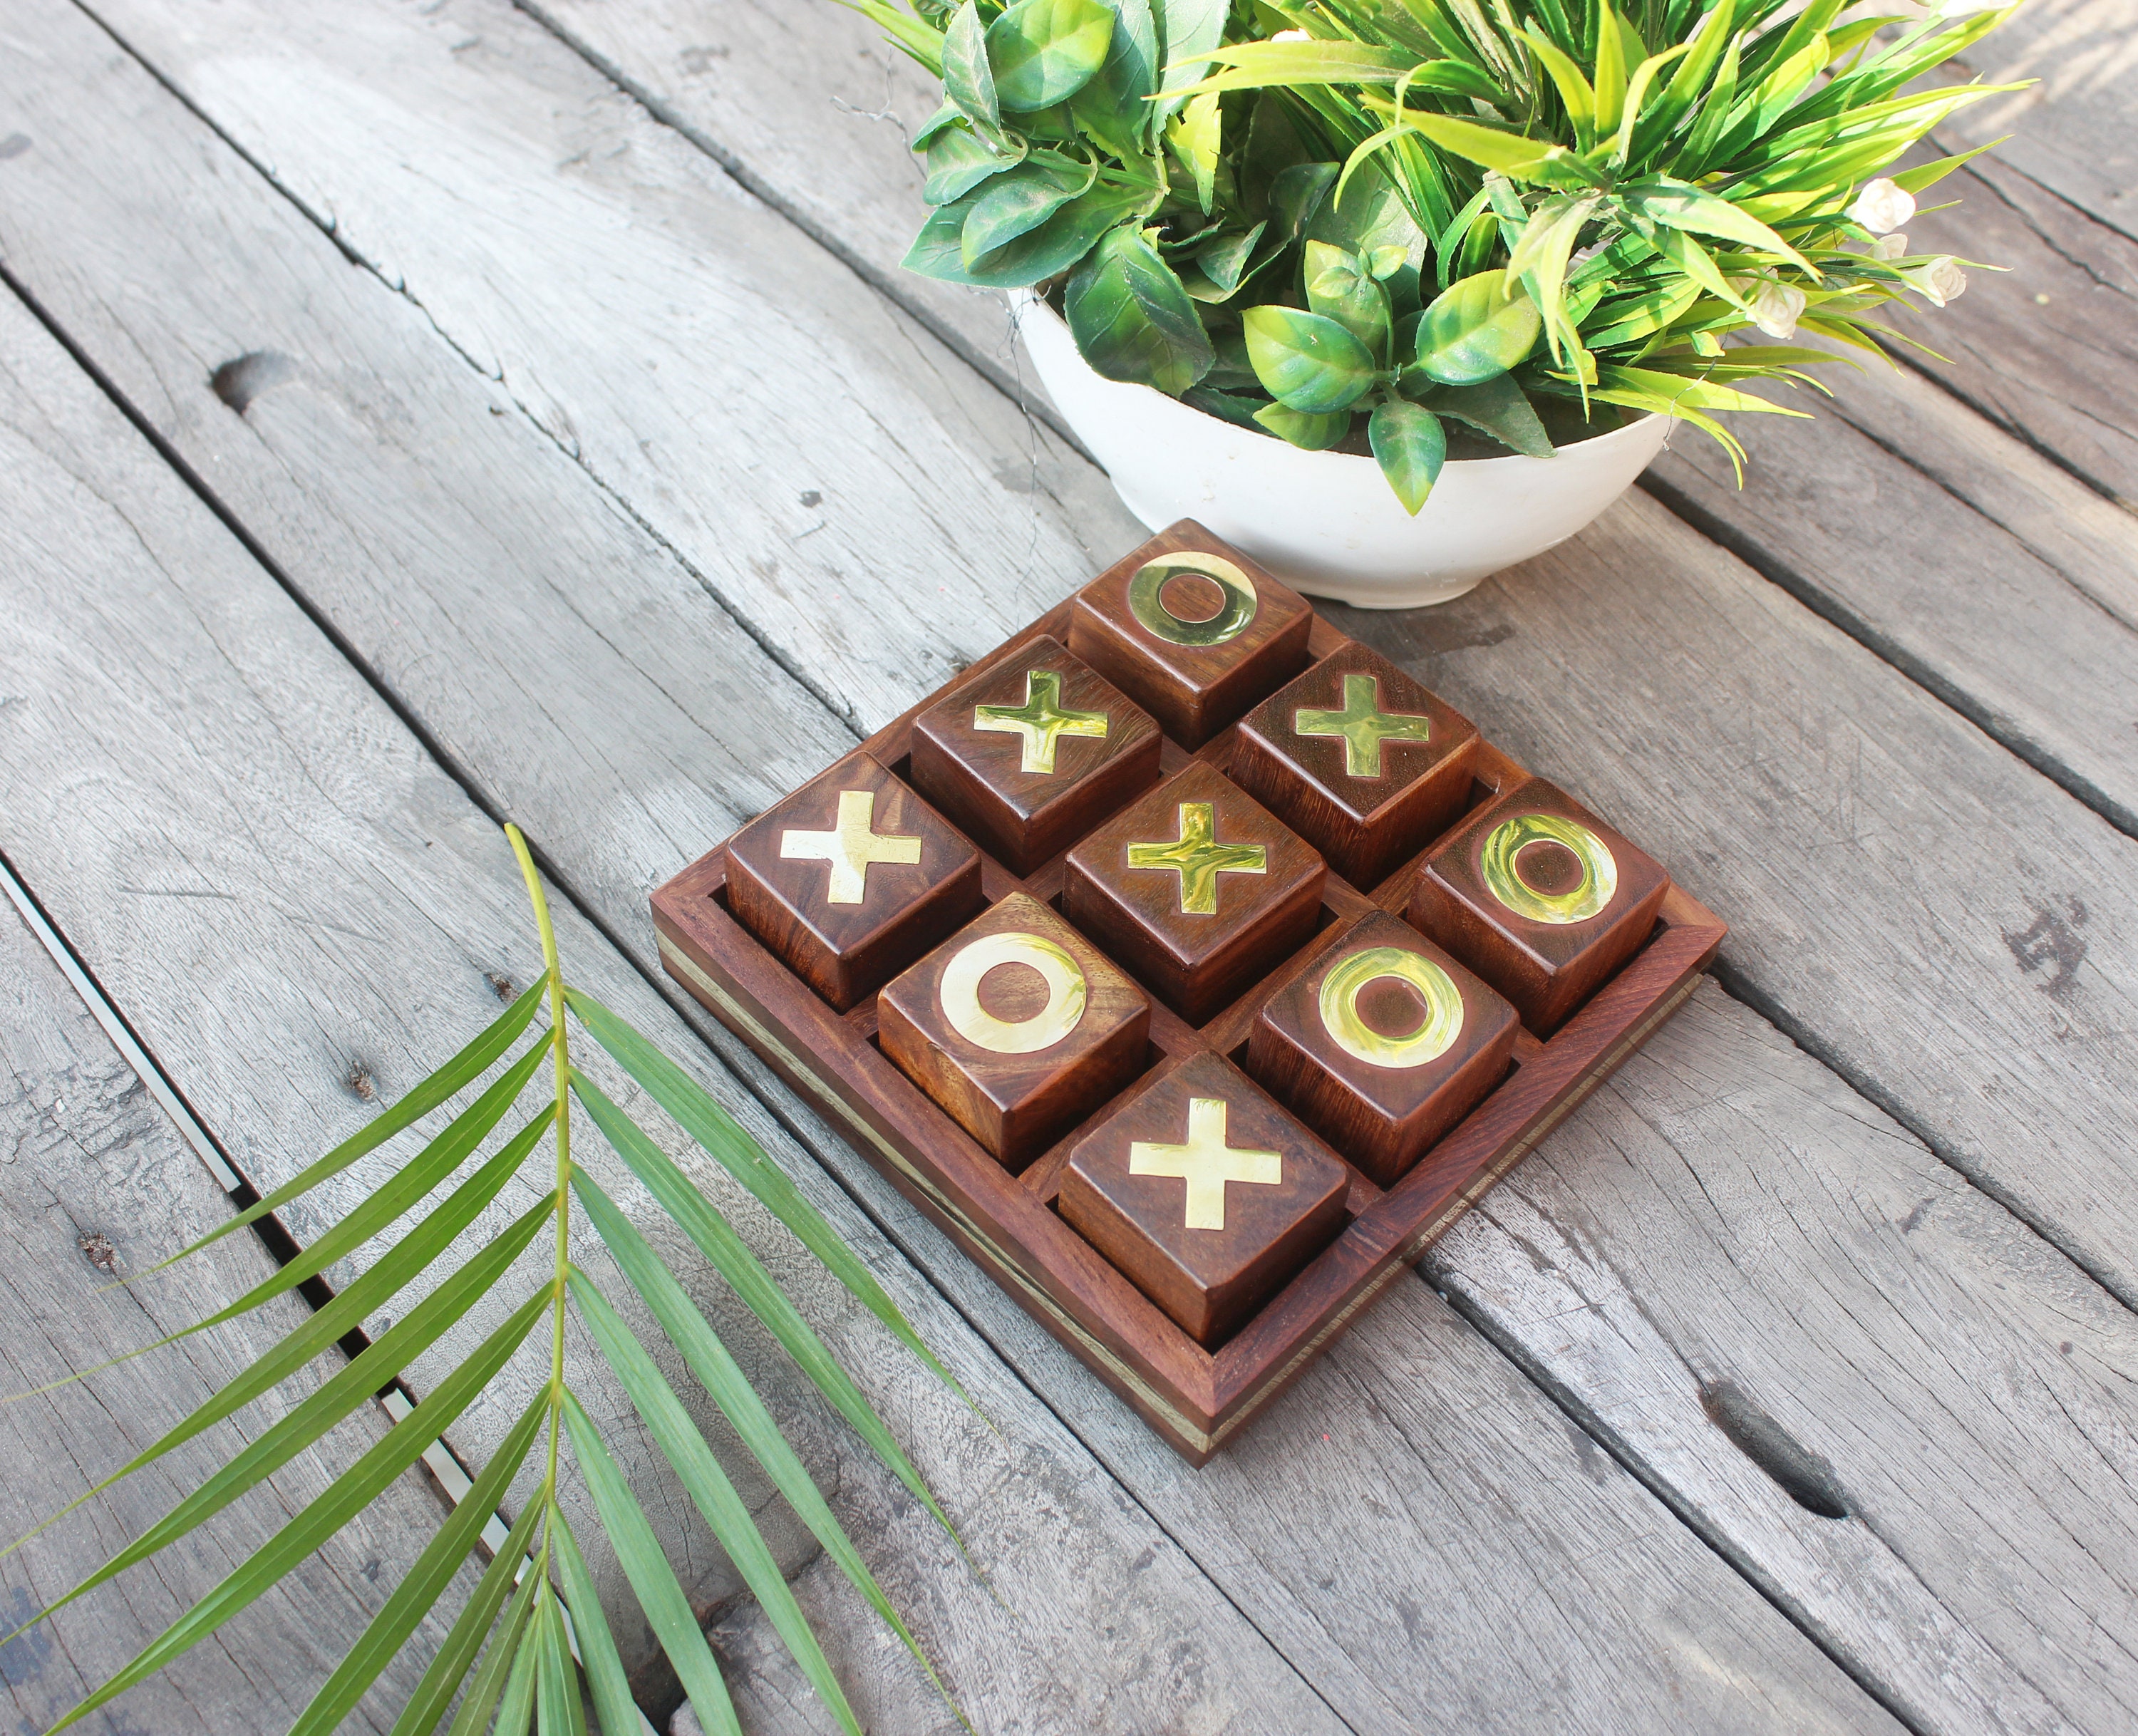 Marble Tic Tac Toe - Decorative Coffee Table Games - Dear Keaton